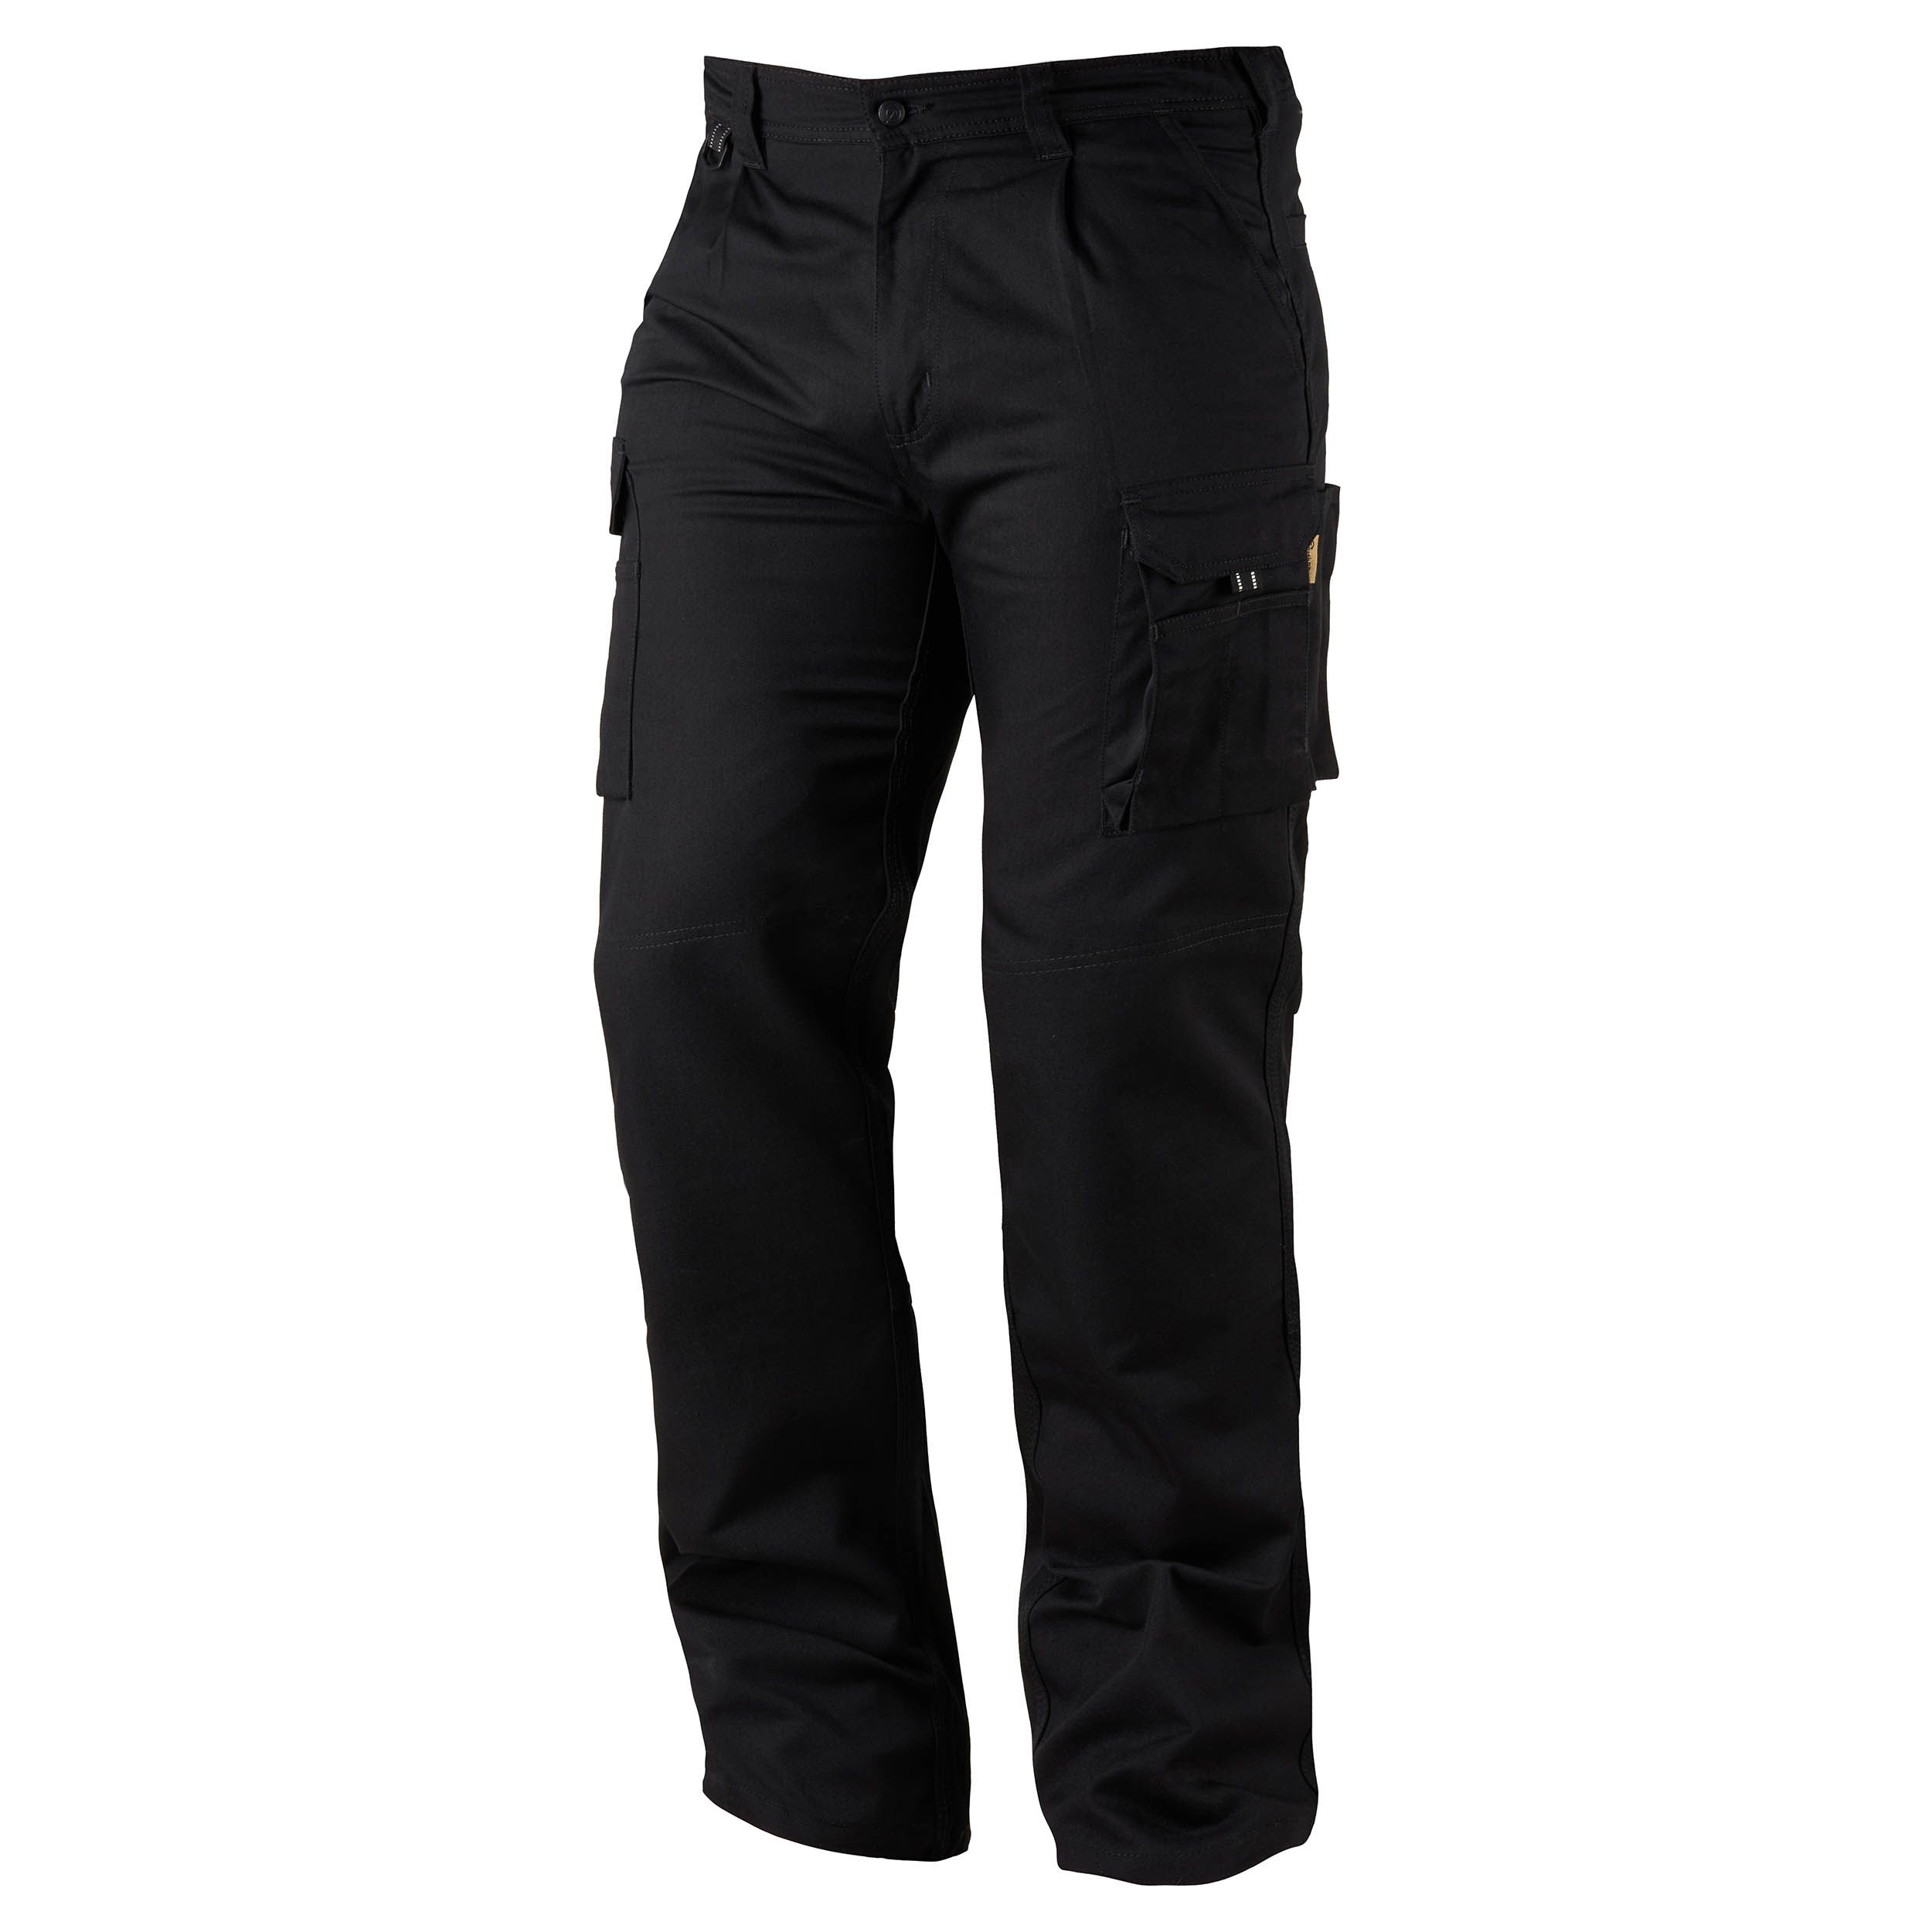 Orn Hawk EarthPro Combat Trouser Black Men's Cotton, Recycled Polyester Hard Wear Trousers 36in, 86 → 91cm Waist